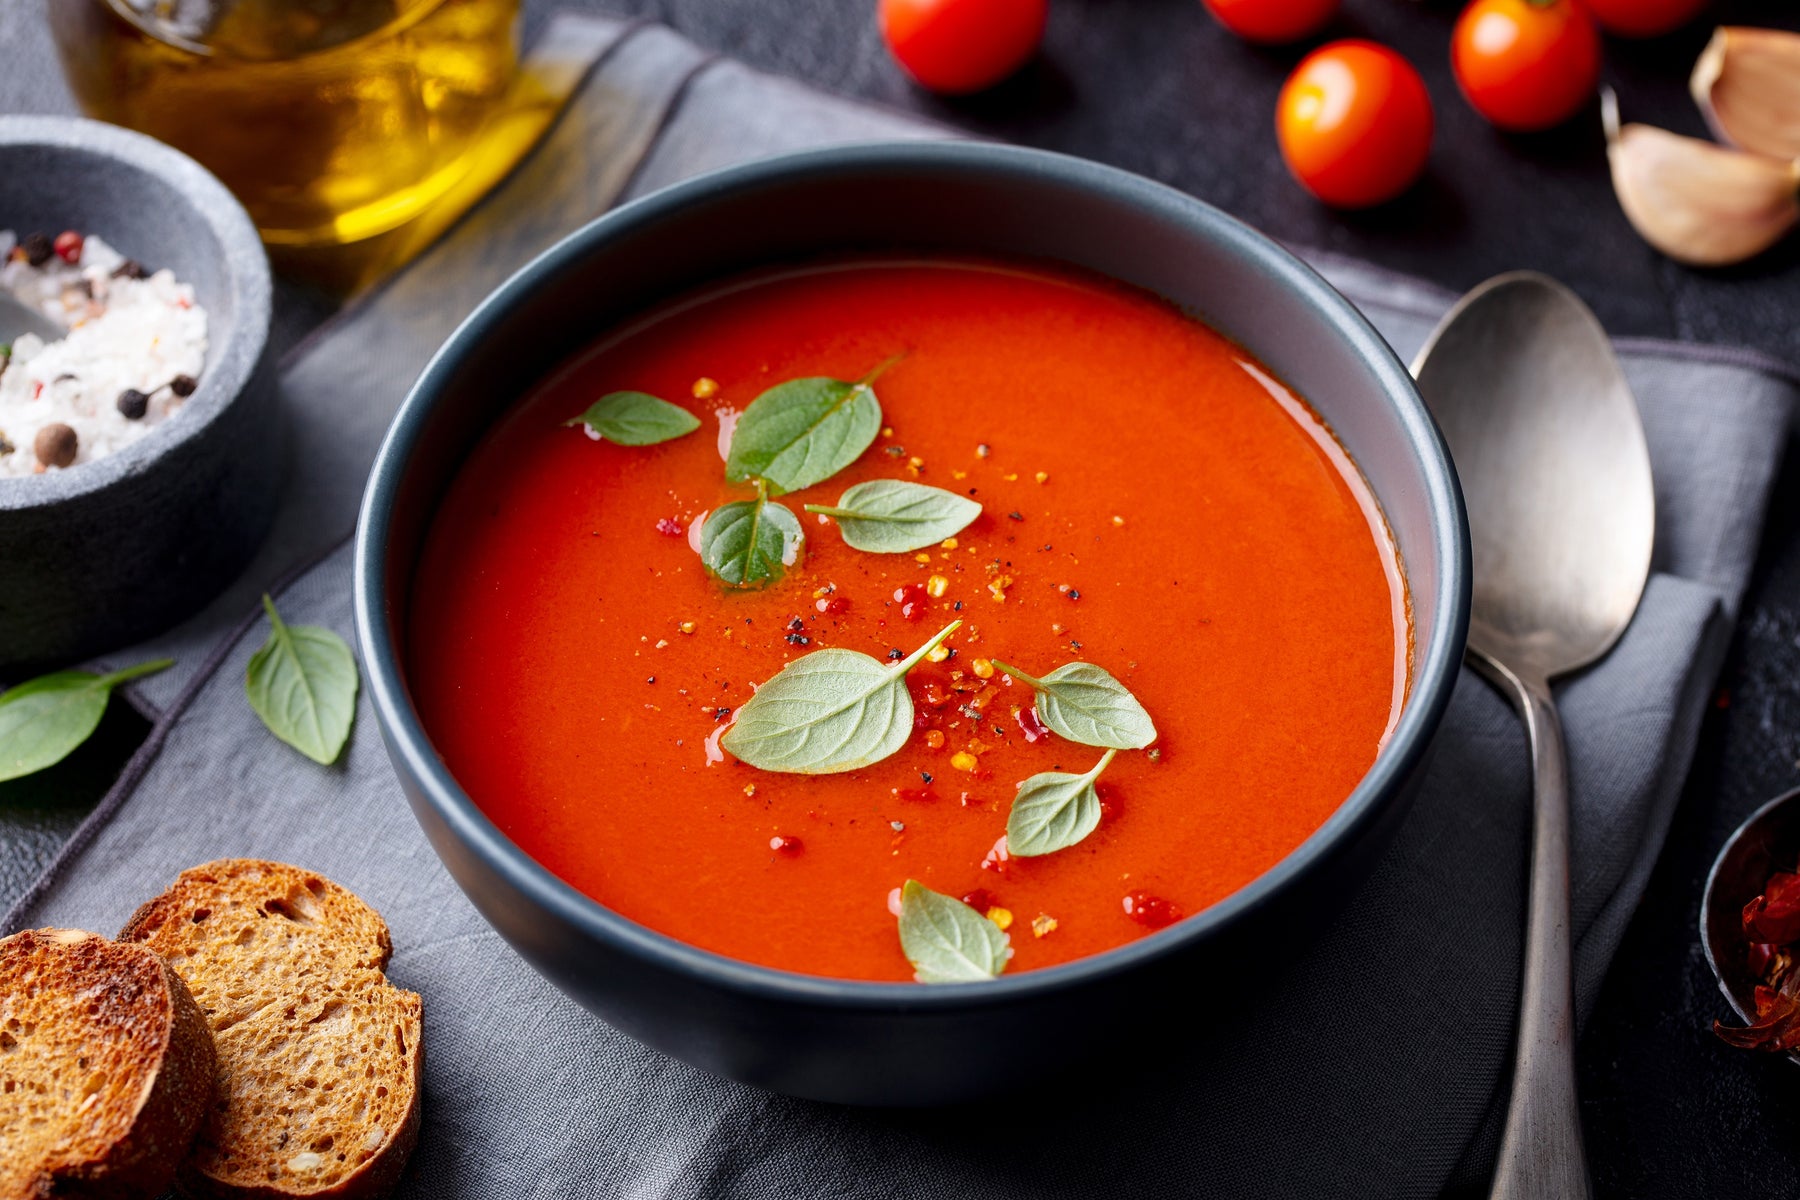 How to Make Homemade Creamy Tomato Basil Soup